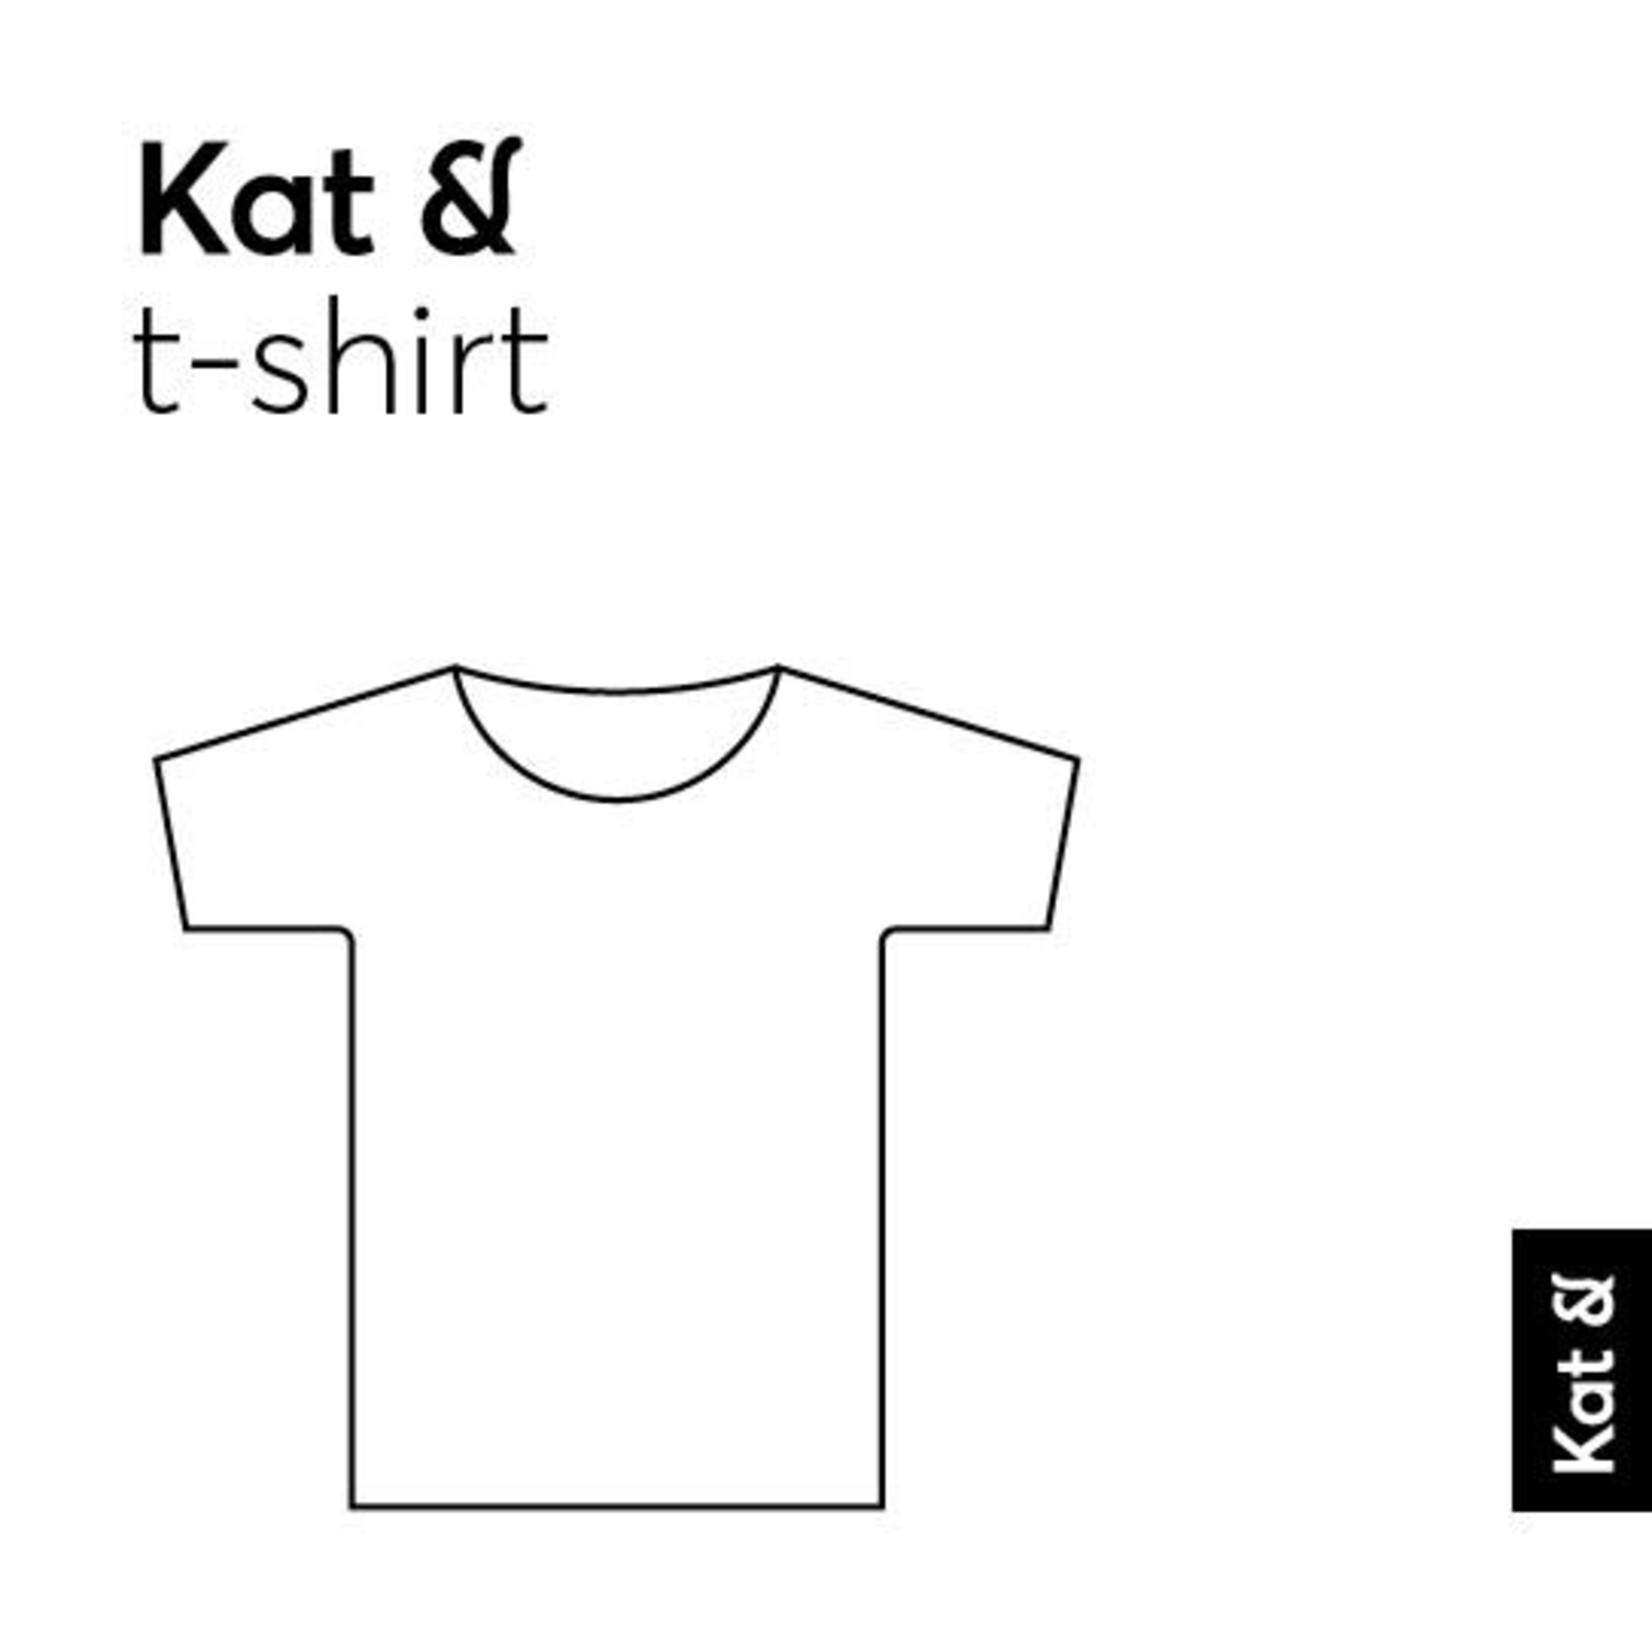 Kat & T-shirt Tangram